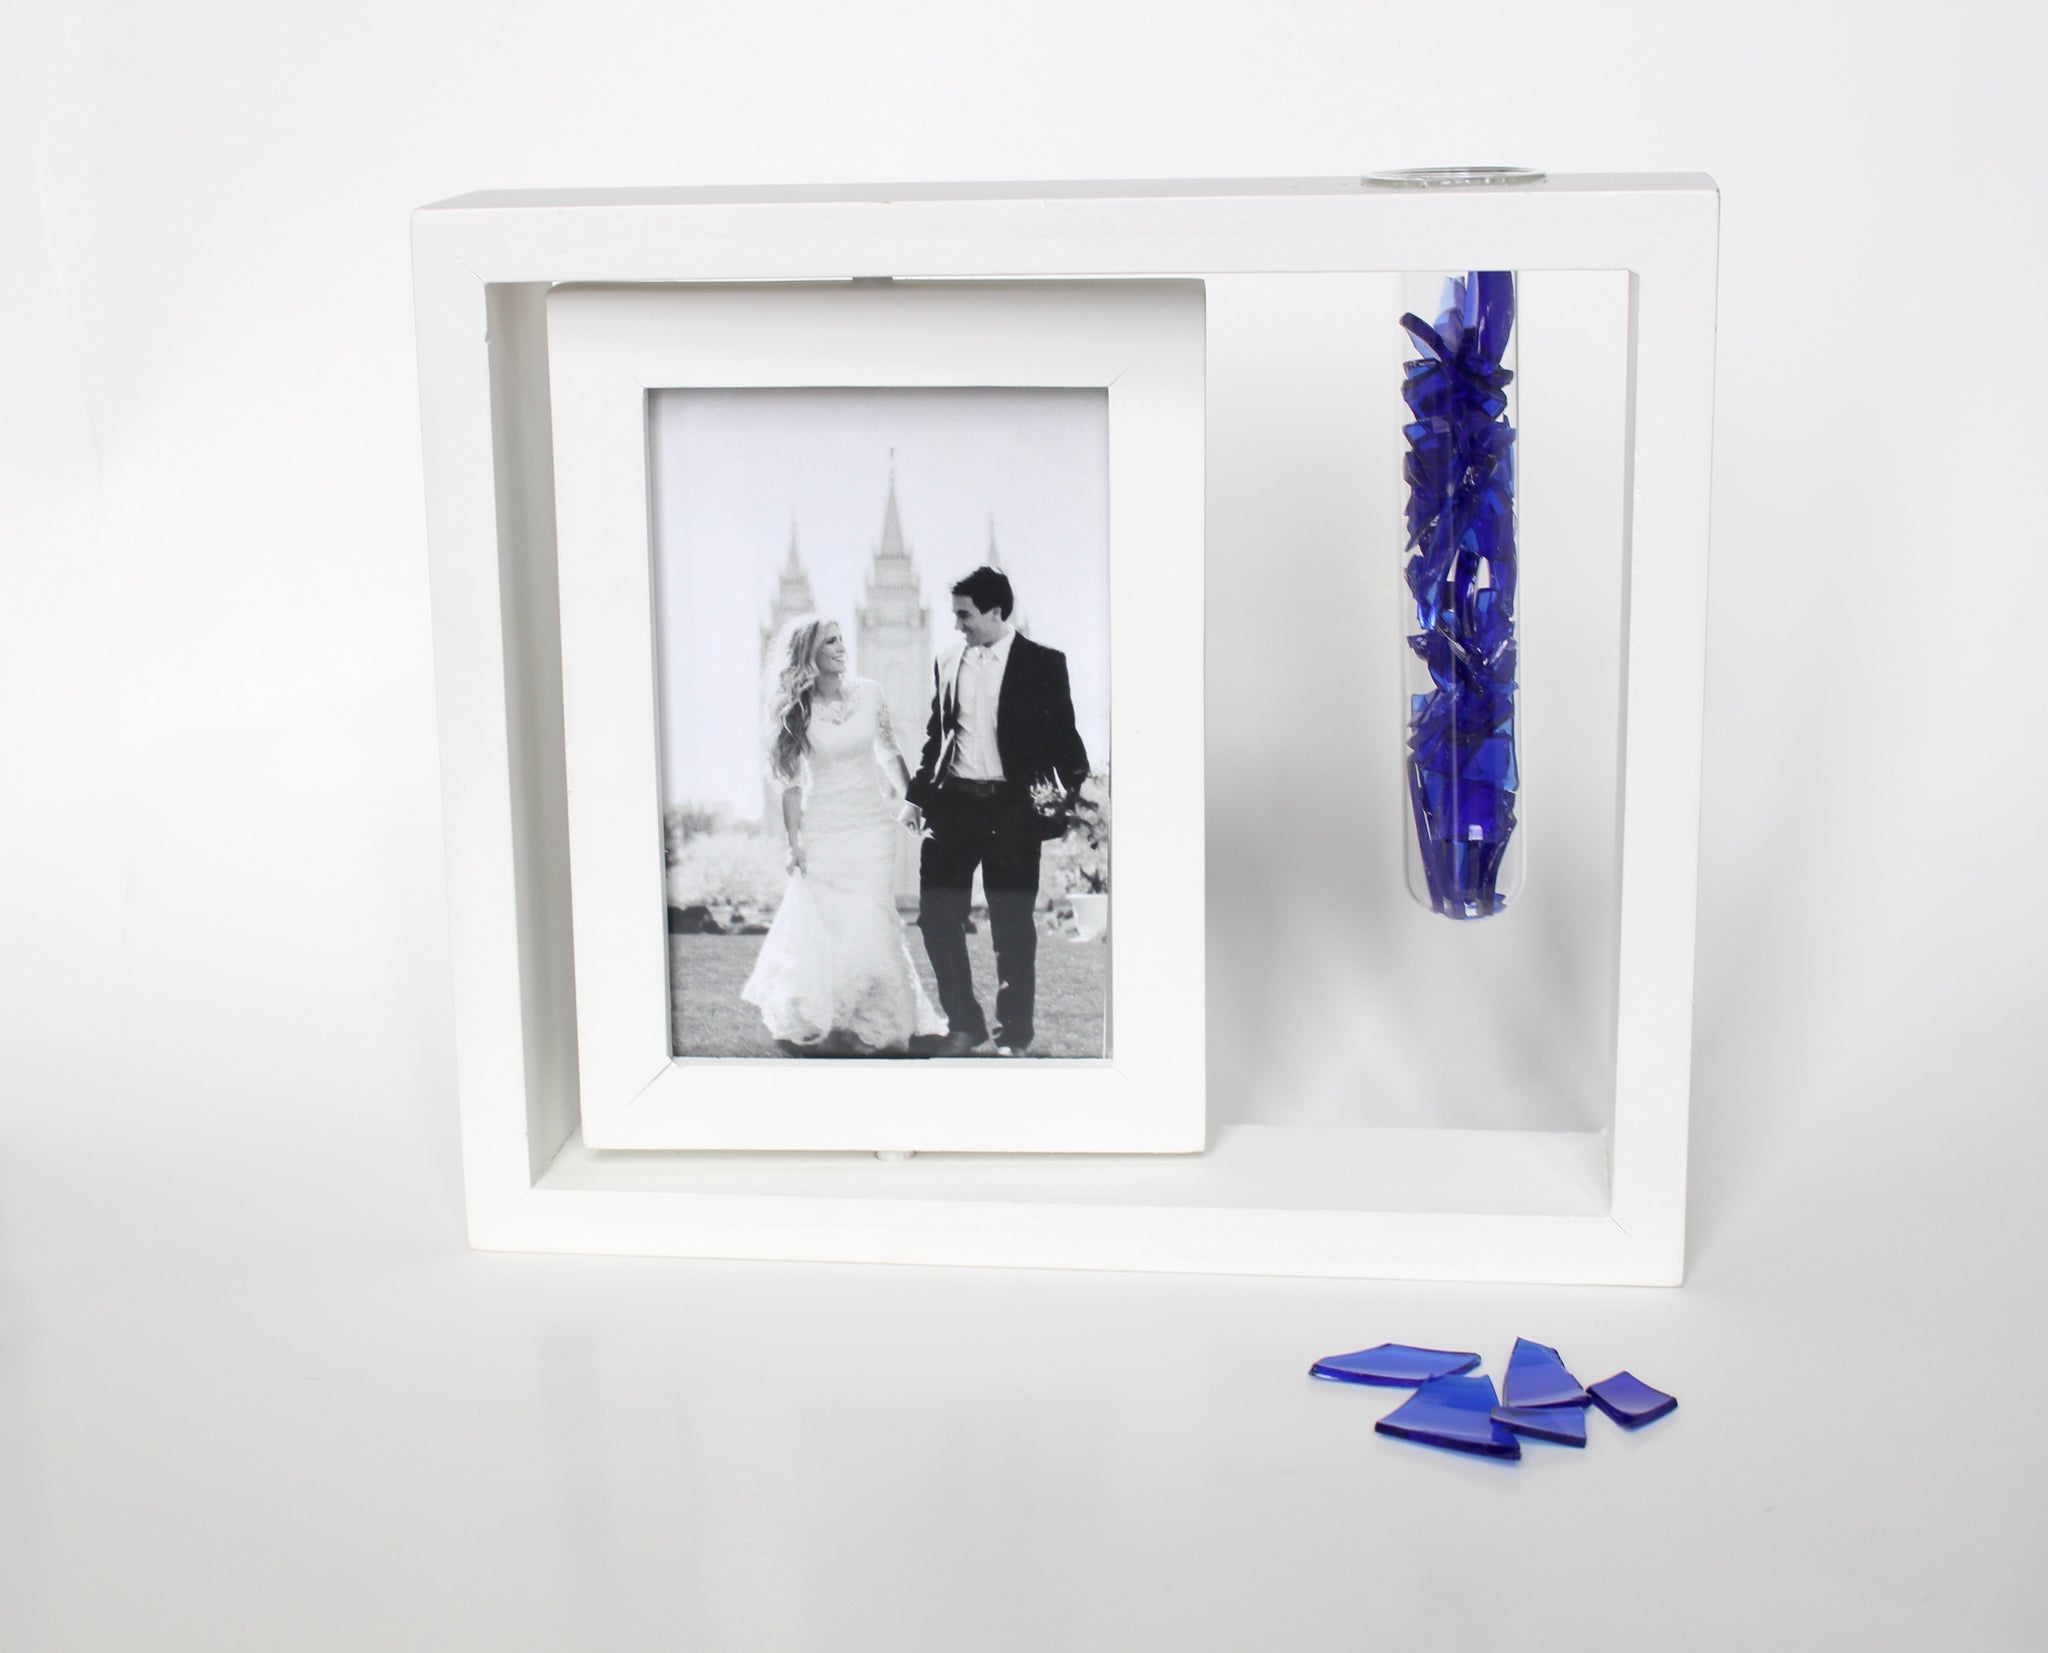 Prinz Decorative Wedding Photo Keepsake Box, White